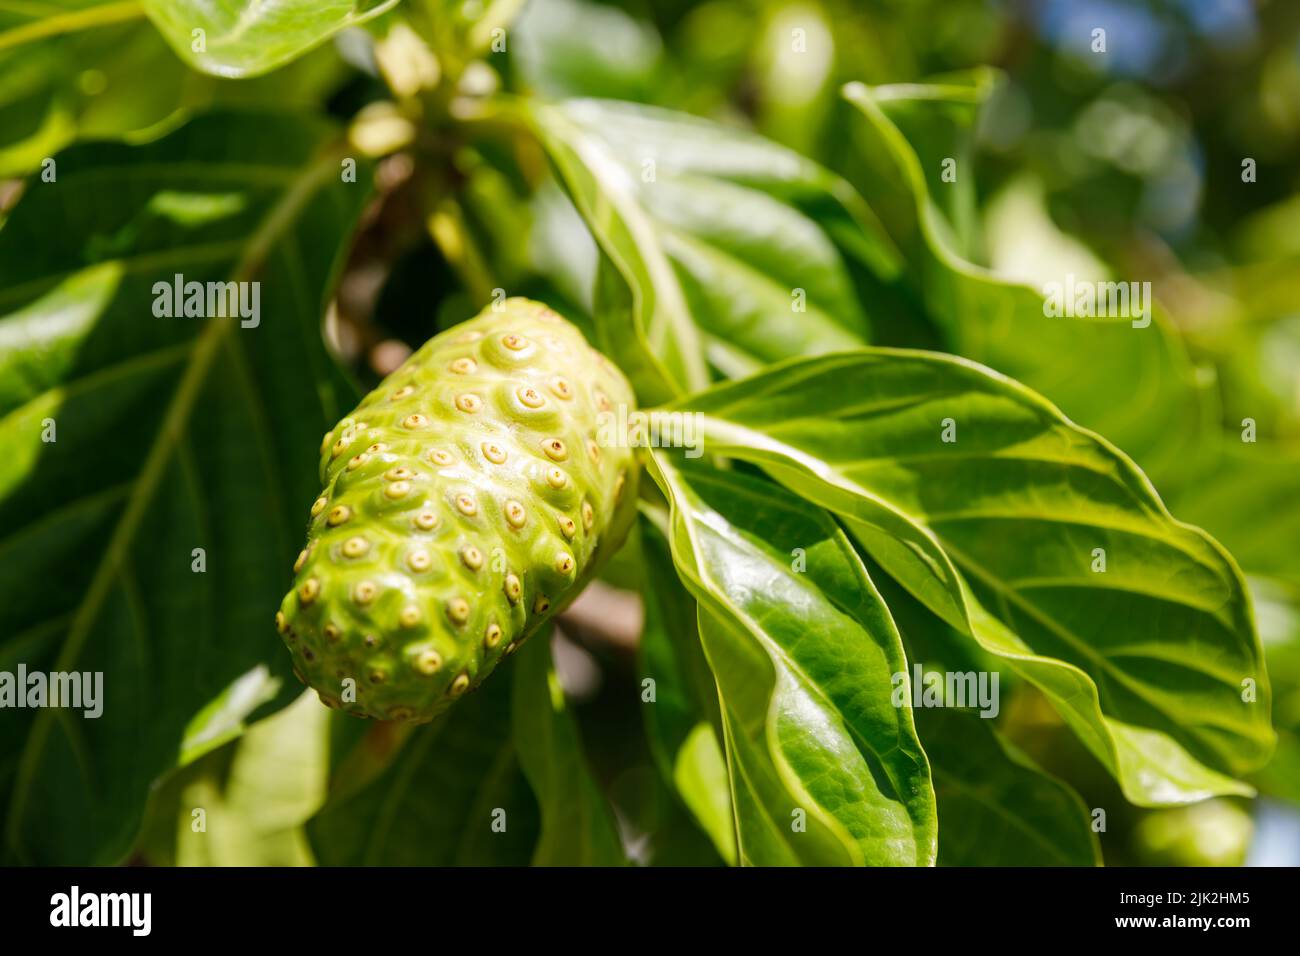 Noni tree, Morinda citrifolia. A medicinal fruit with unique properties. Stock Photo